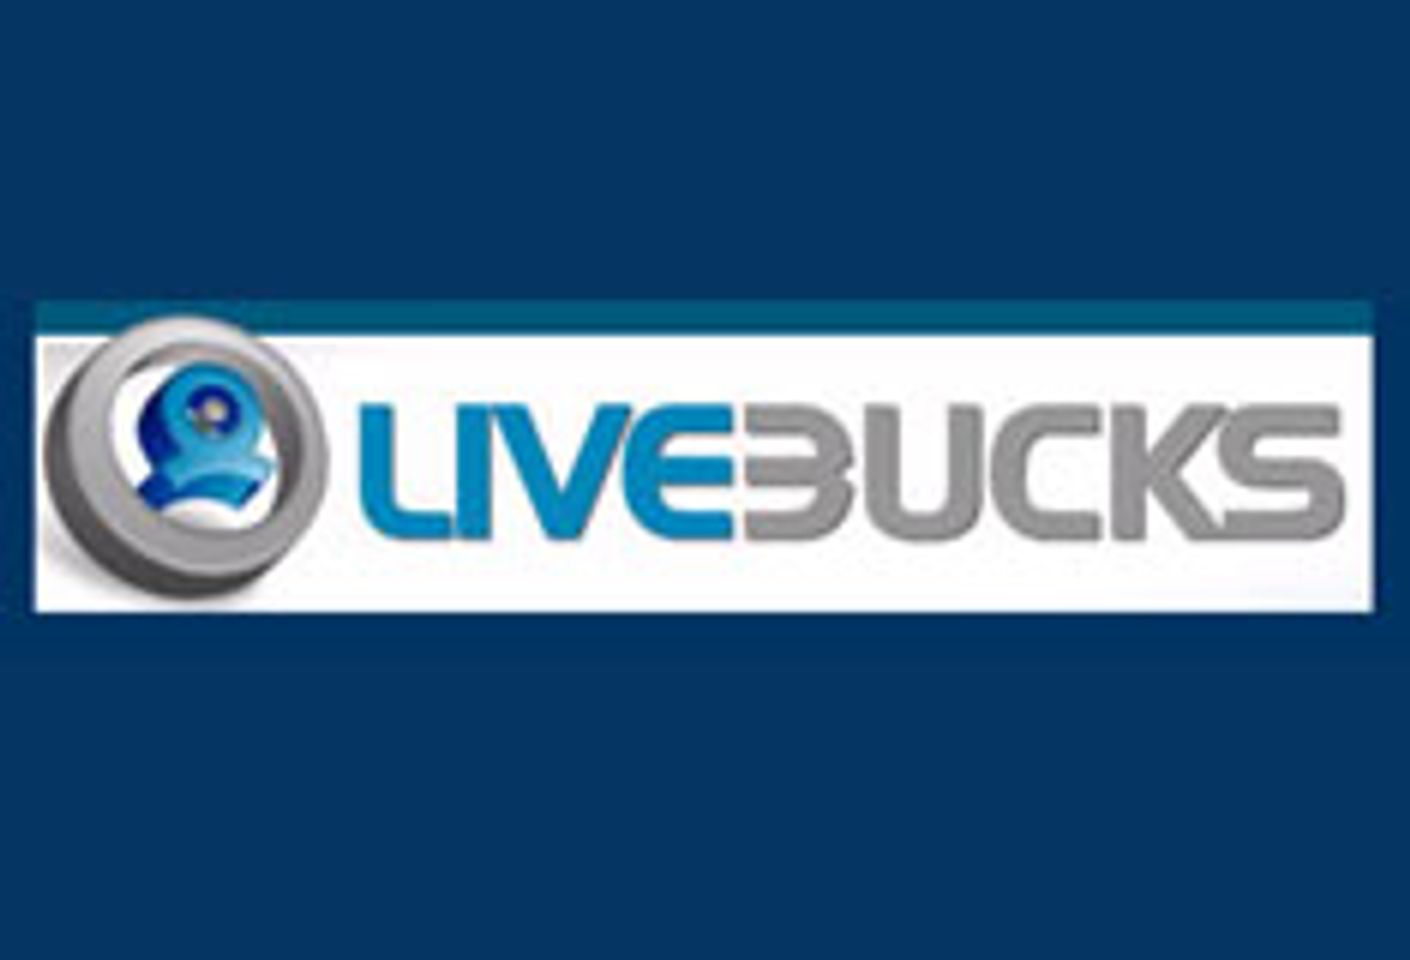 LiveBucks Announces Xbox 360 Promotion